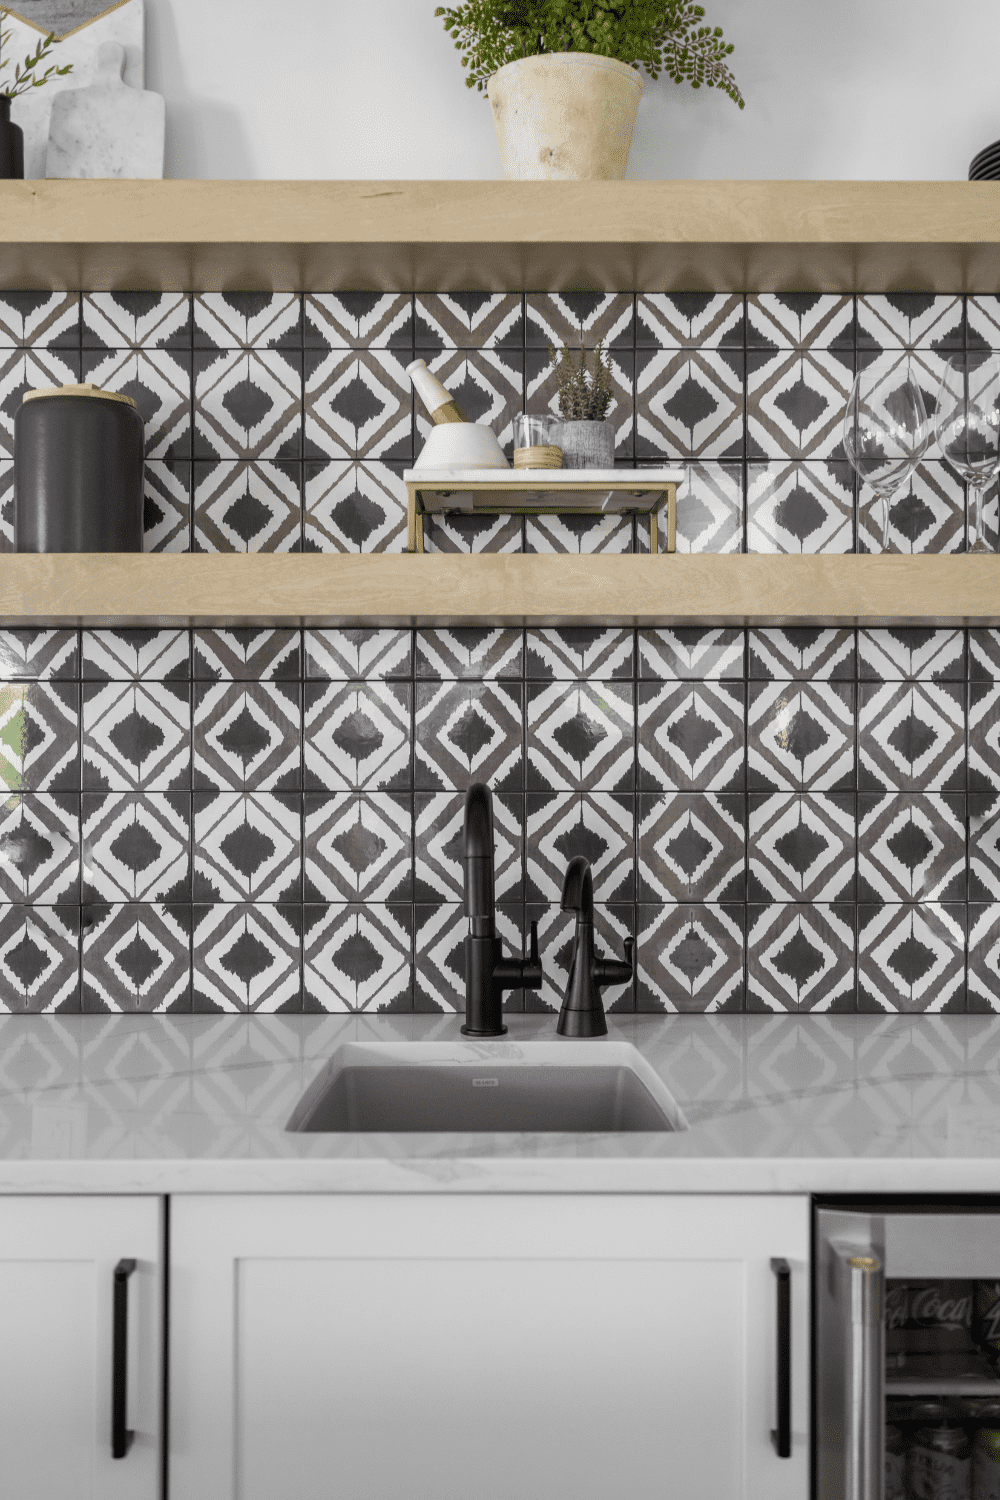 Nicholas Design Build | A kitchen with a black and white tile backsplash.